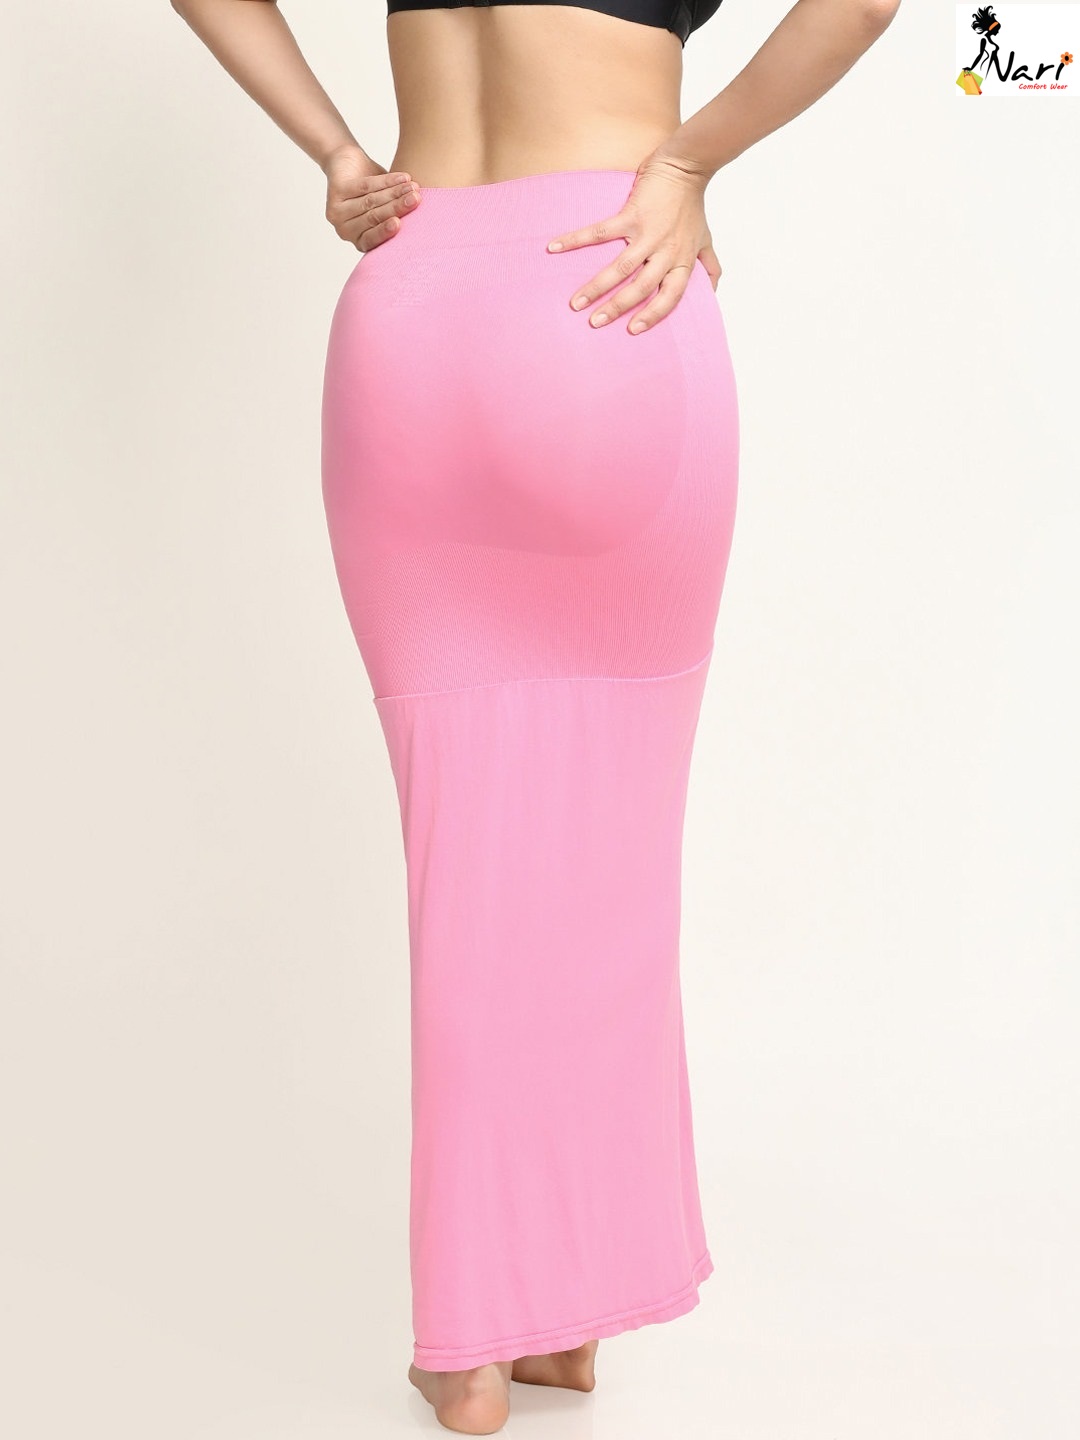 https://naricomfortwear.com/wp-content/uploads/2021/04/4005-Saree-Shaper-Candy-Pink-Nari-Comfort-Wear-2.jpg